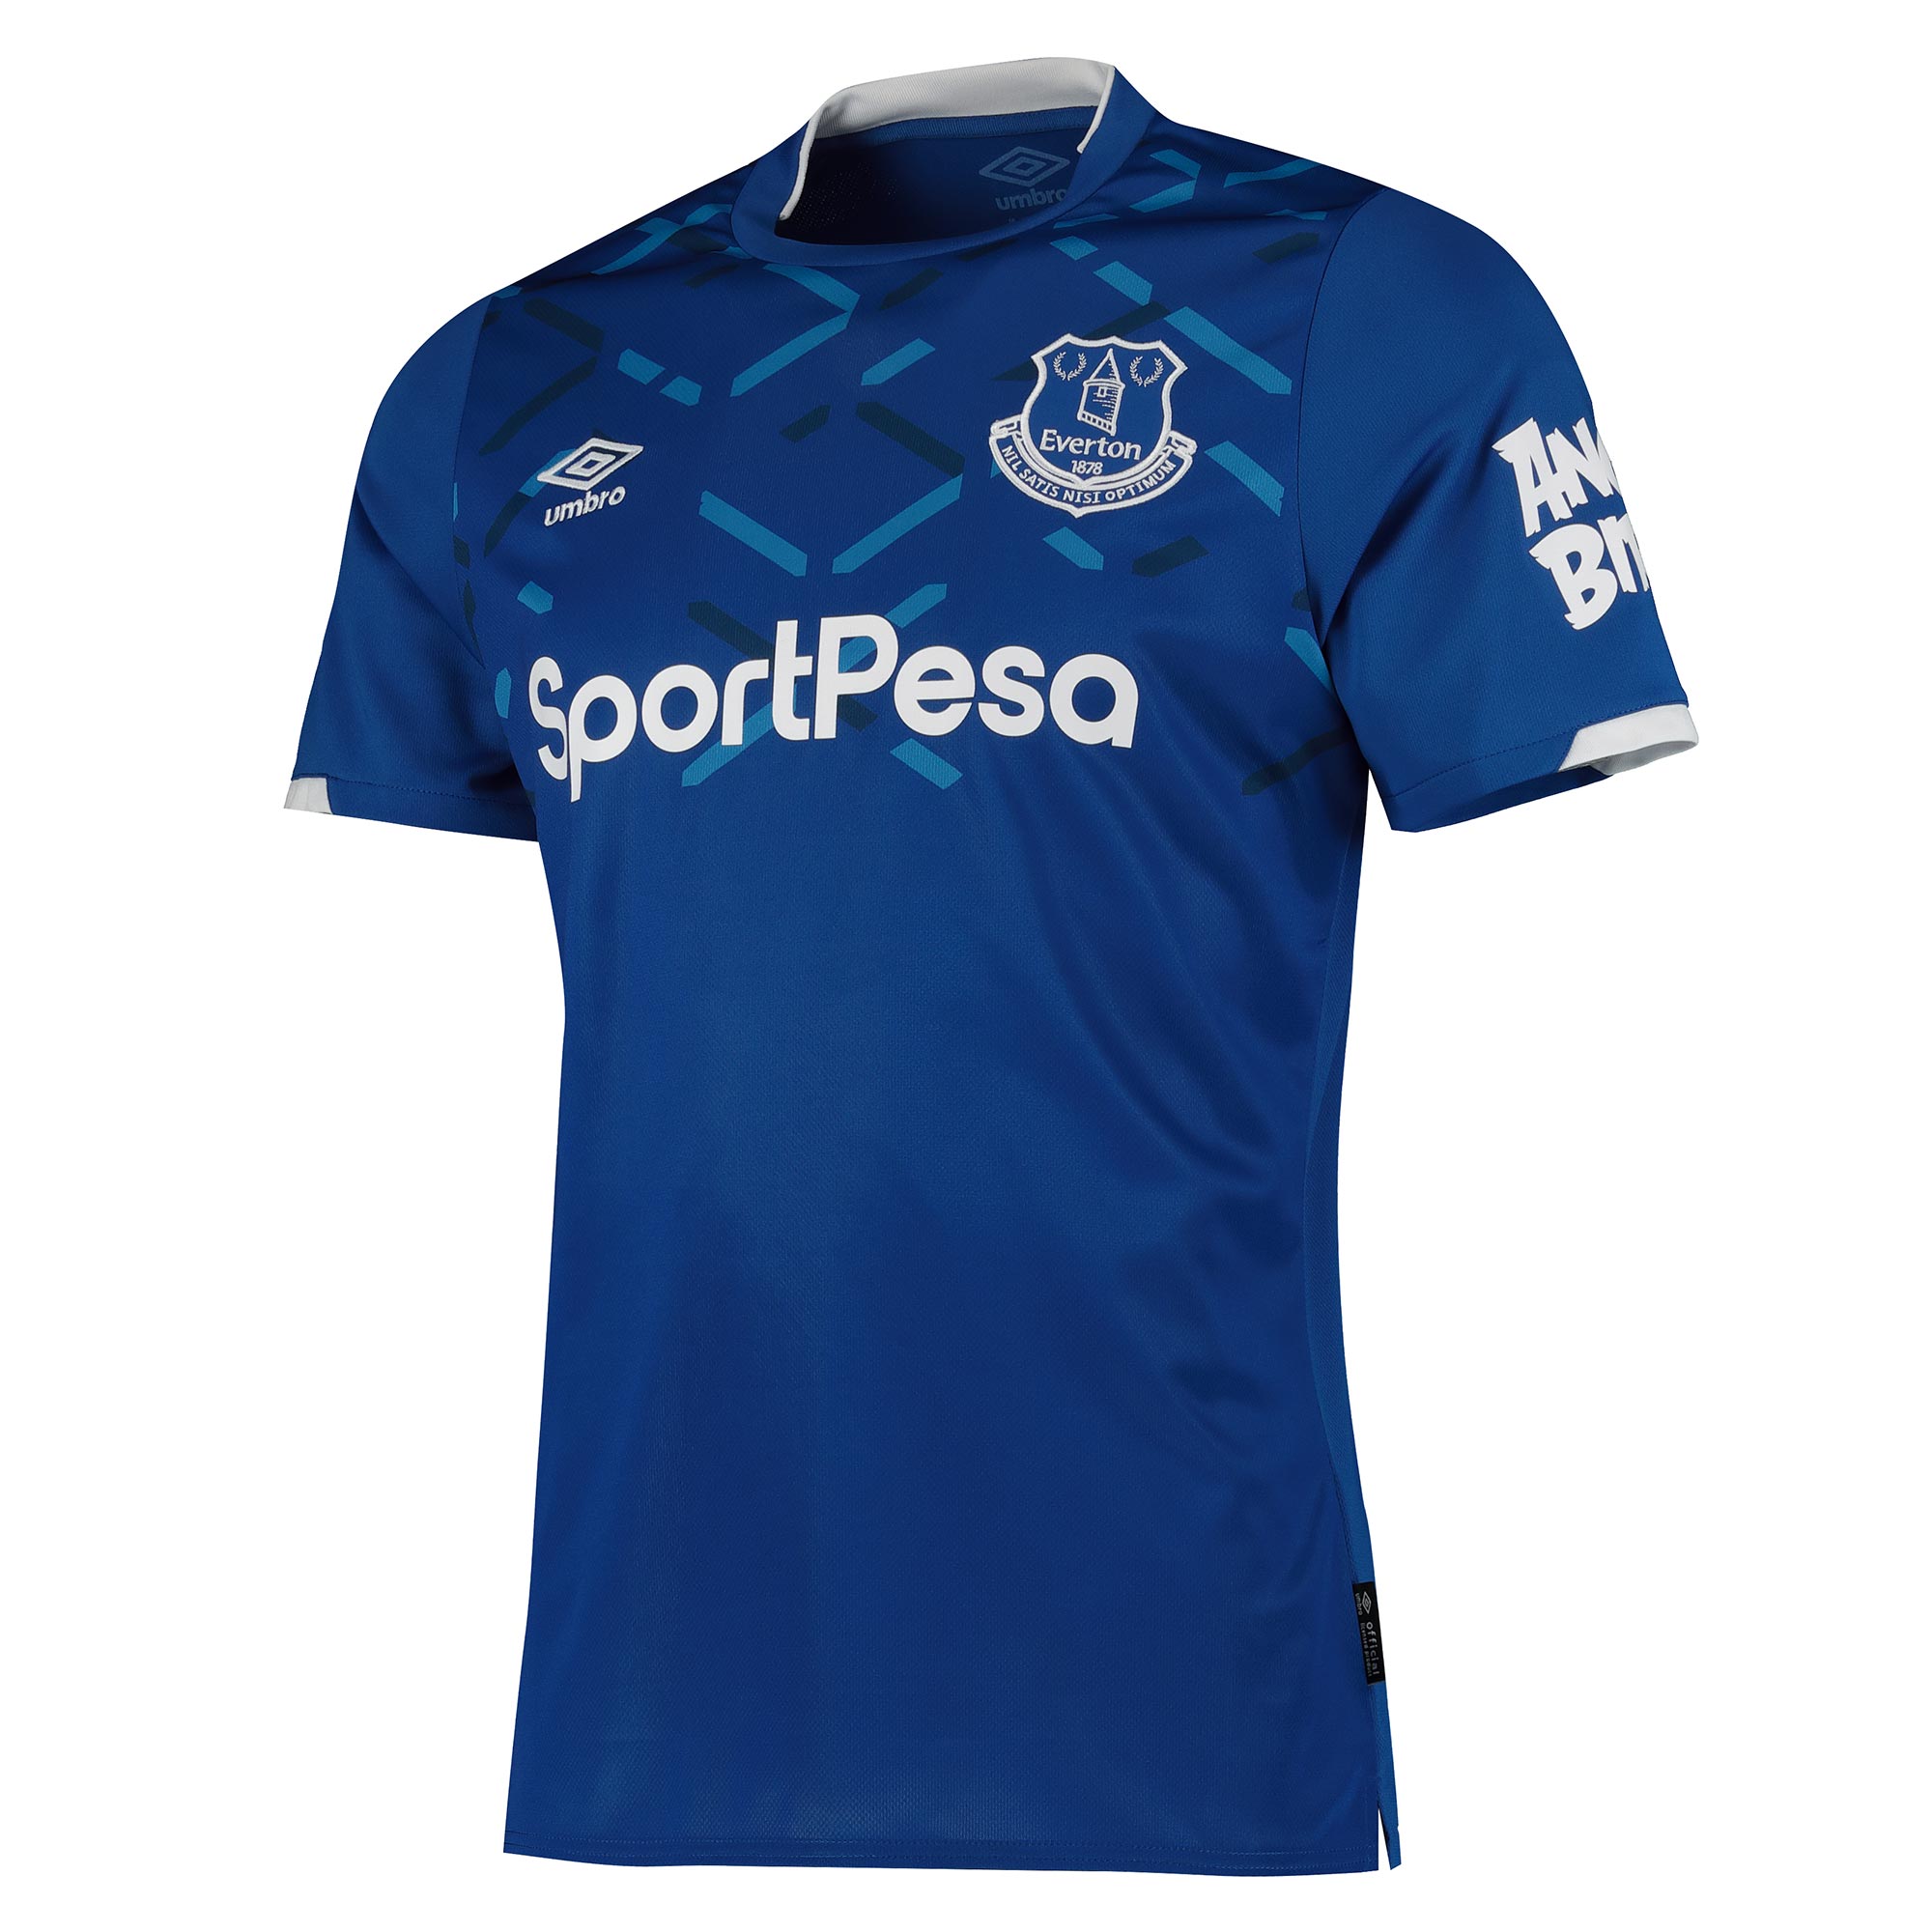 Everton 2019-20 Umbro Home Kit | 19/20 Kits | Football shirt blog